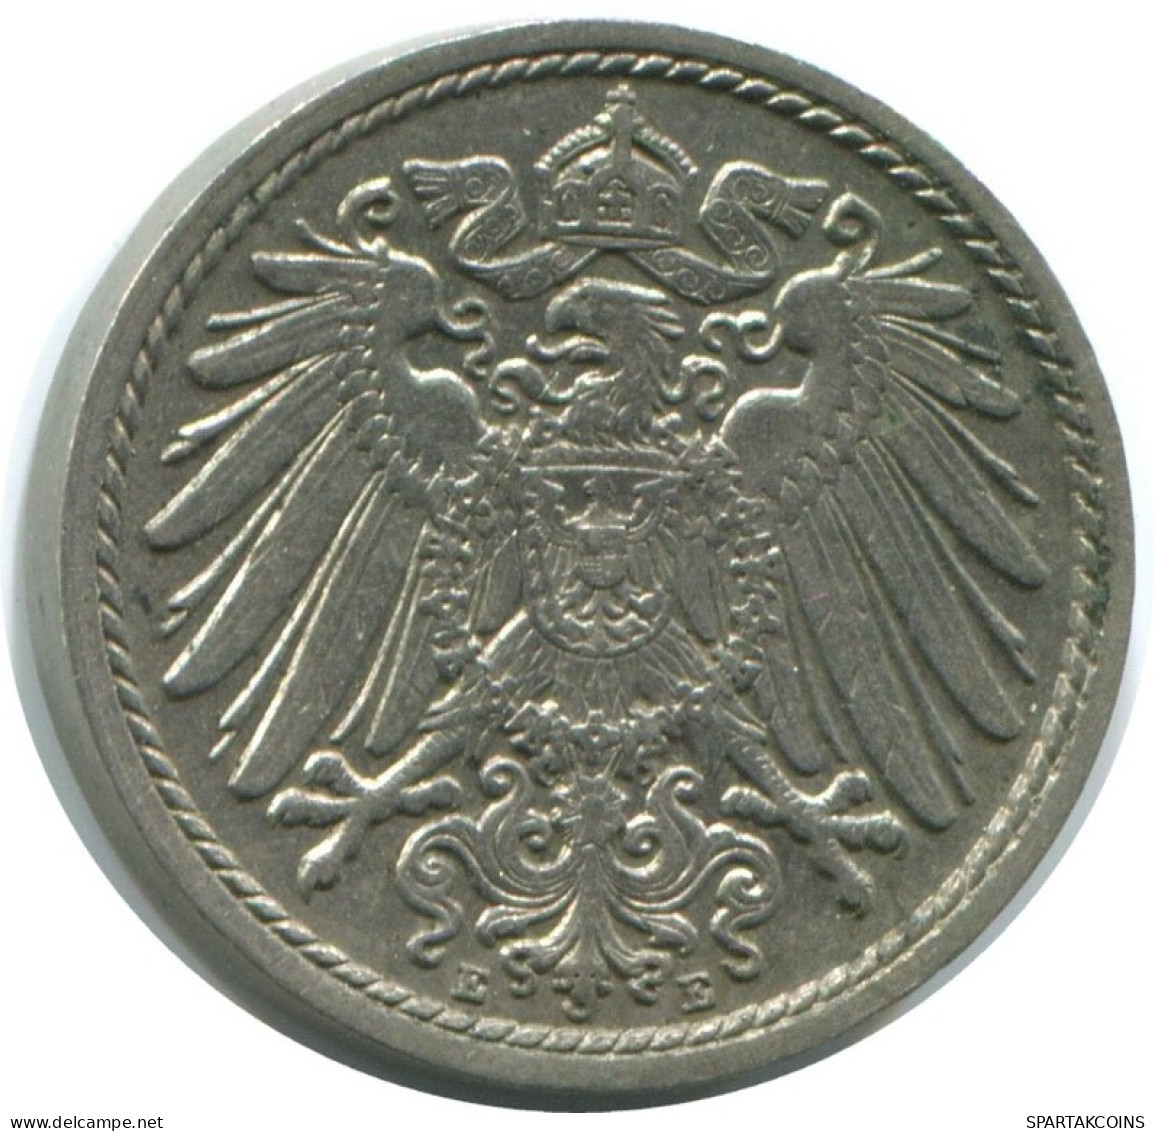 5 PFENNIG 1912 E ALEMANIA Moneda GERMANY #AE625.E.A - 5 Pfennig